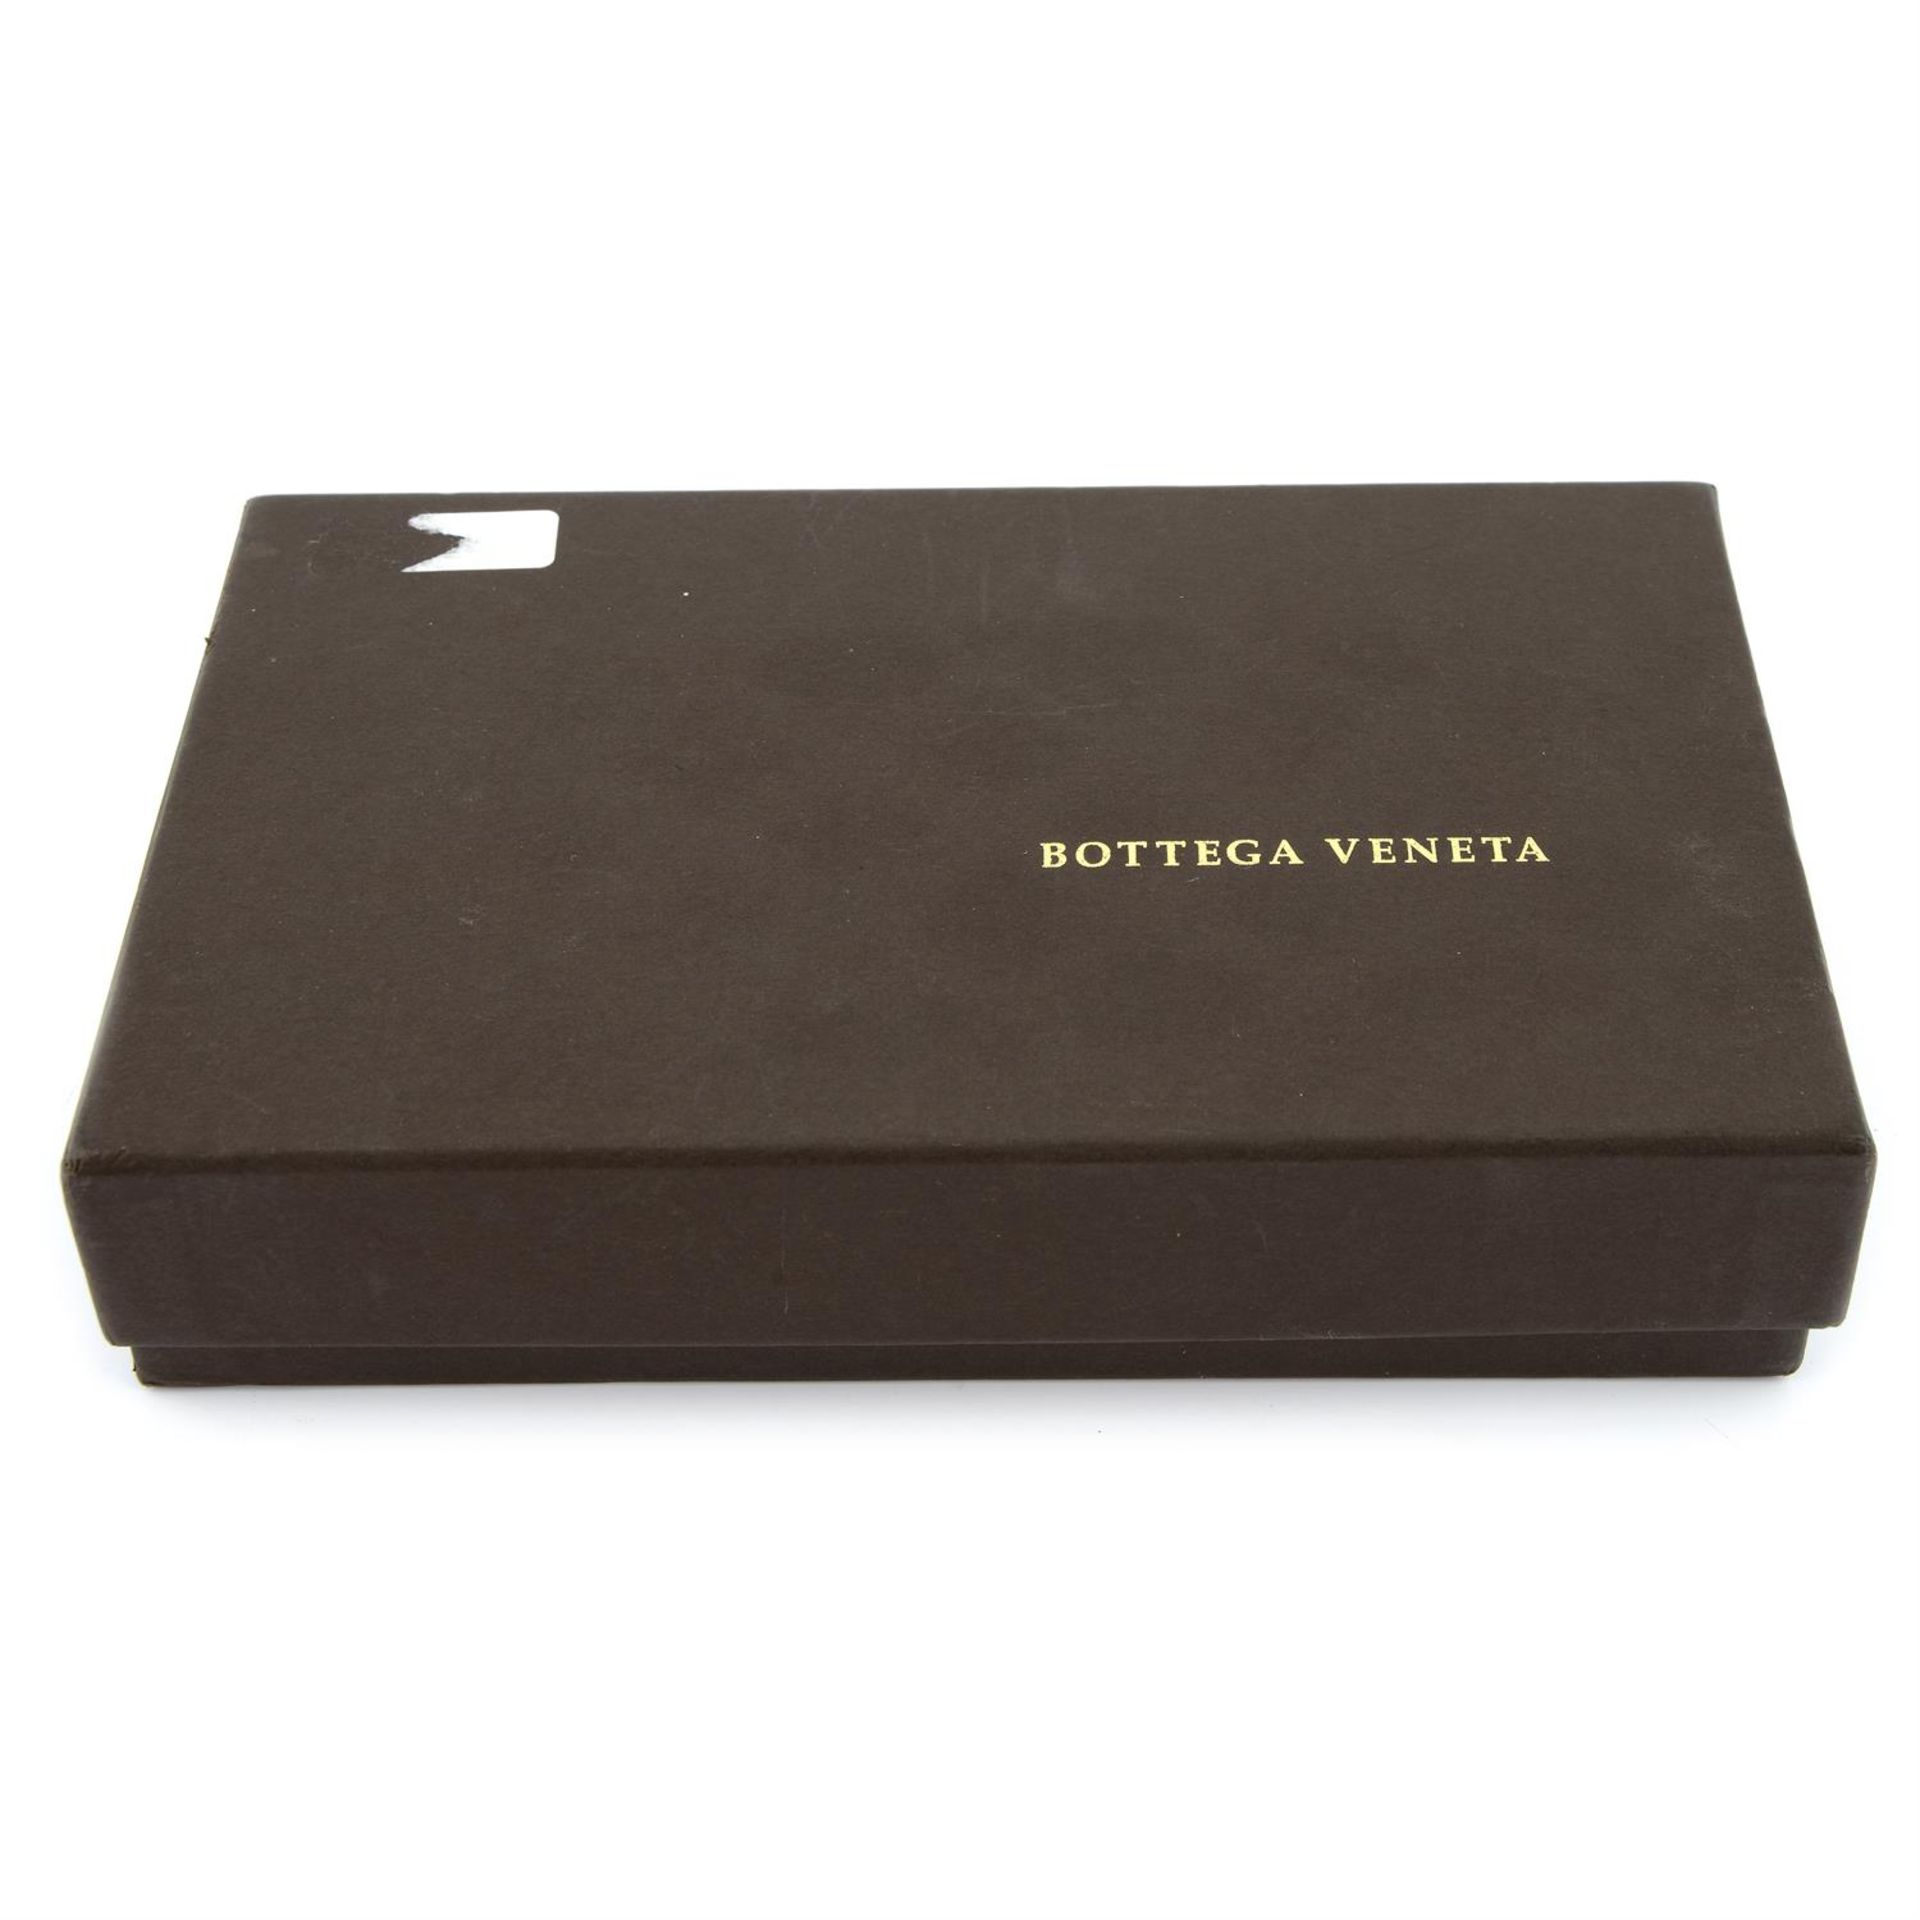 BOTTEGA VENETA - an Intrecciato Zippy wallet. - Image 4 of 4